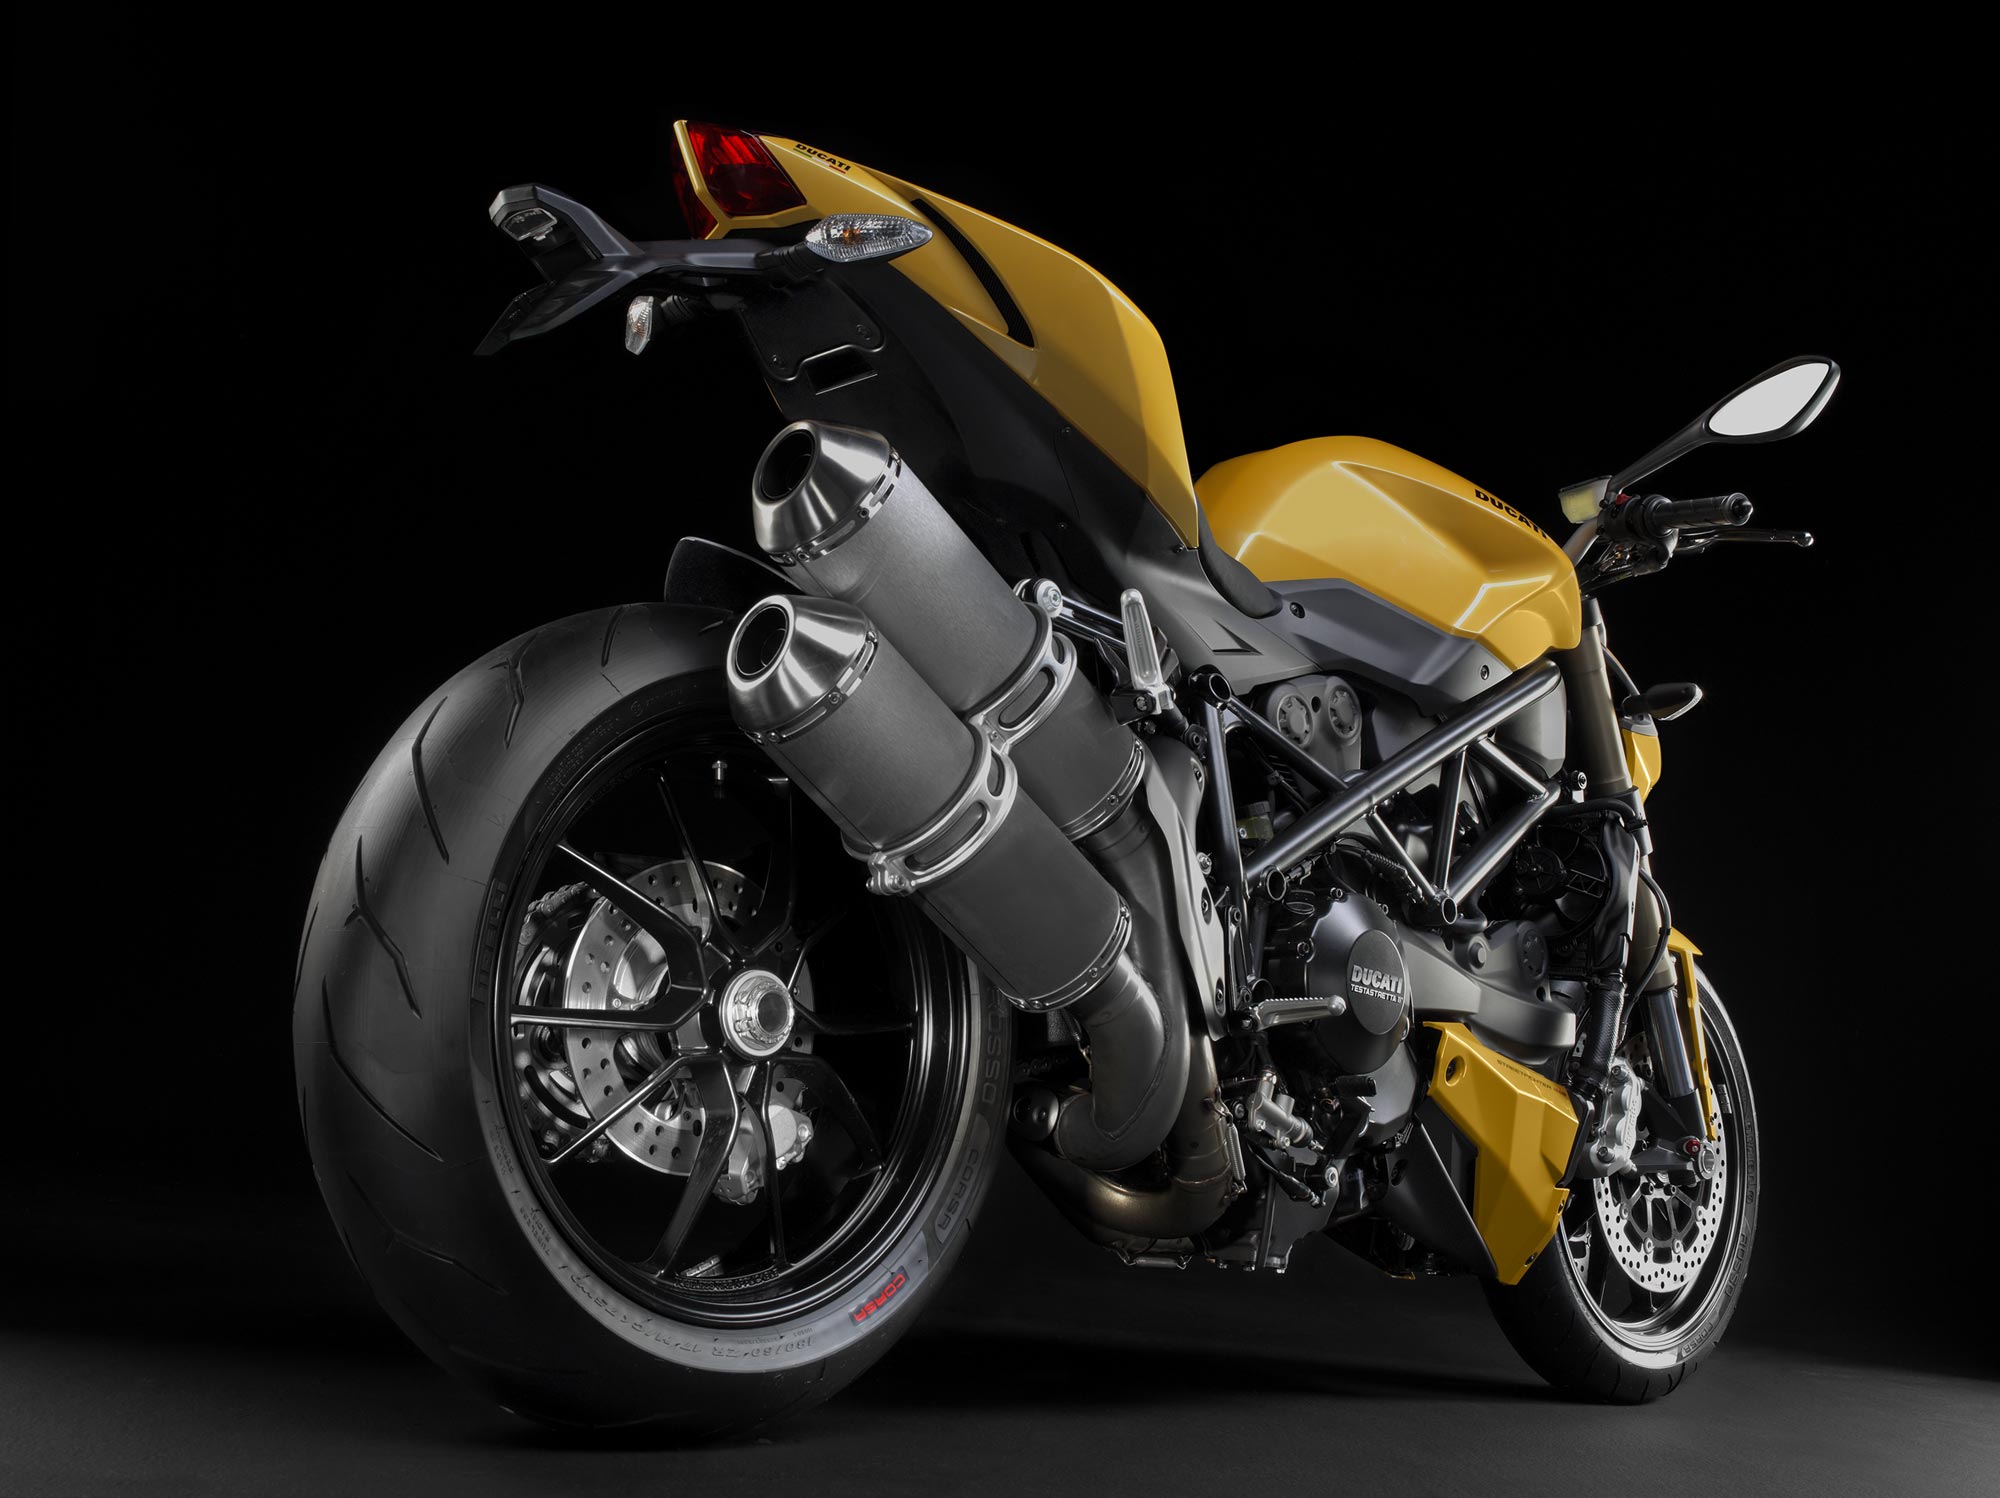 America, the 2012 Ducati Streetfighter 848 comes in traditional Ducati 